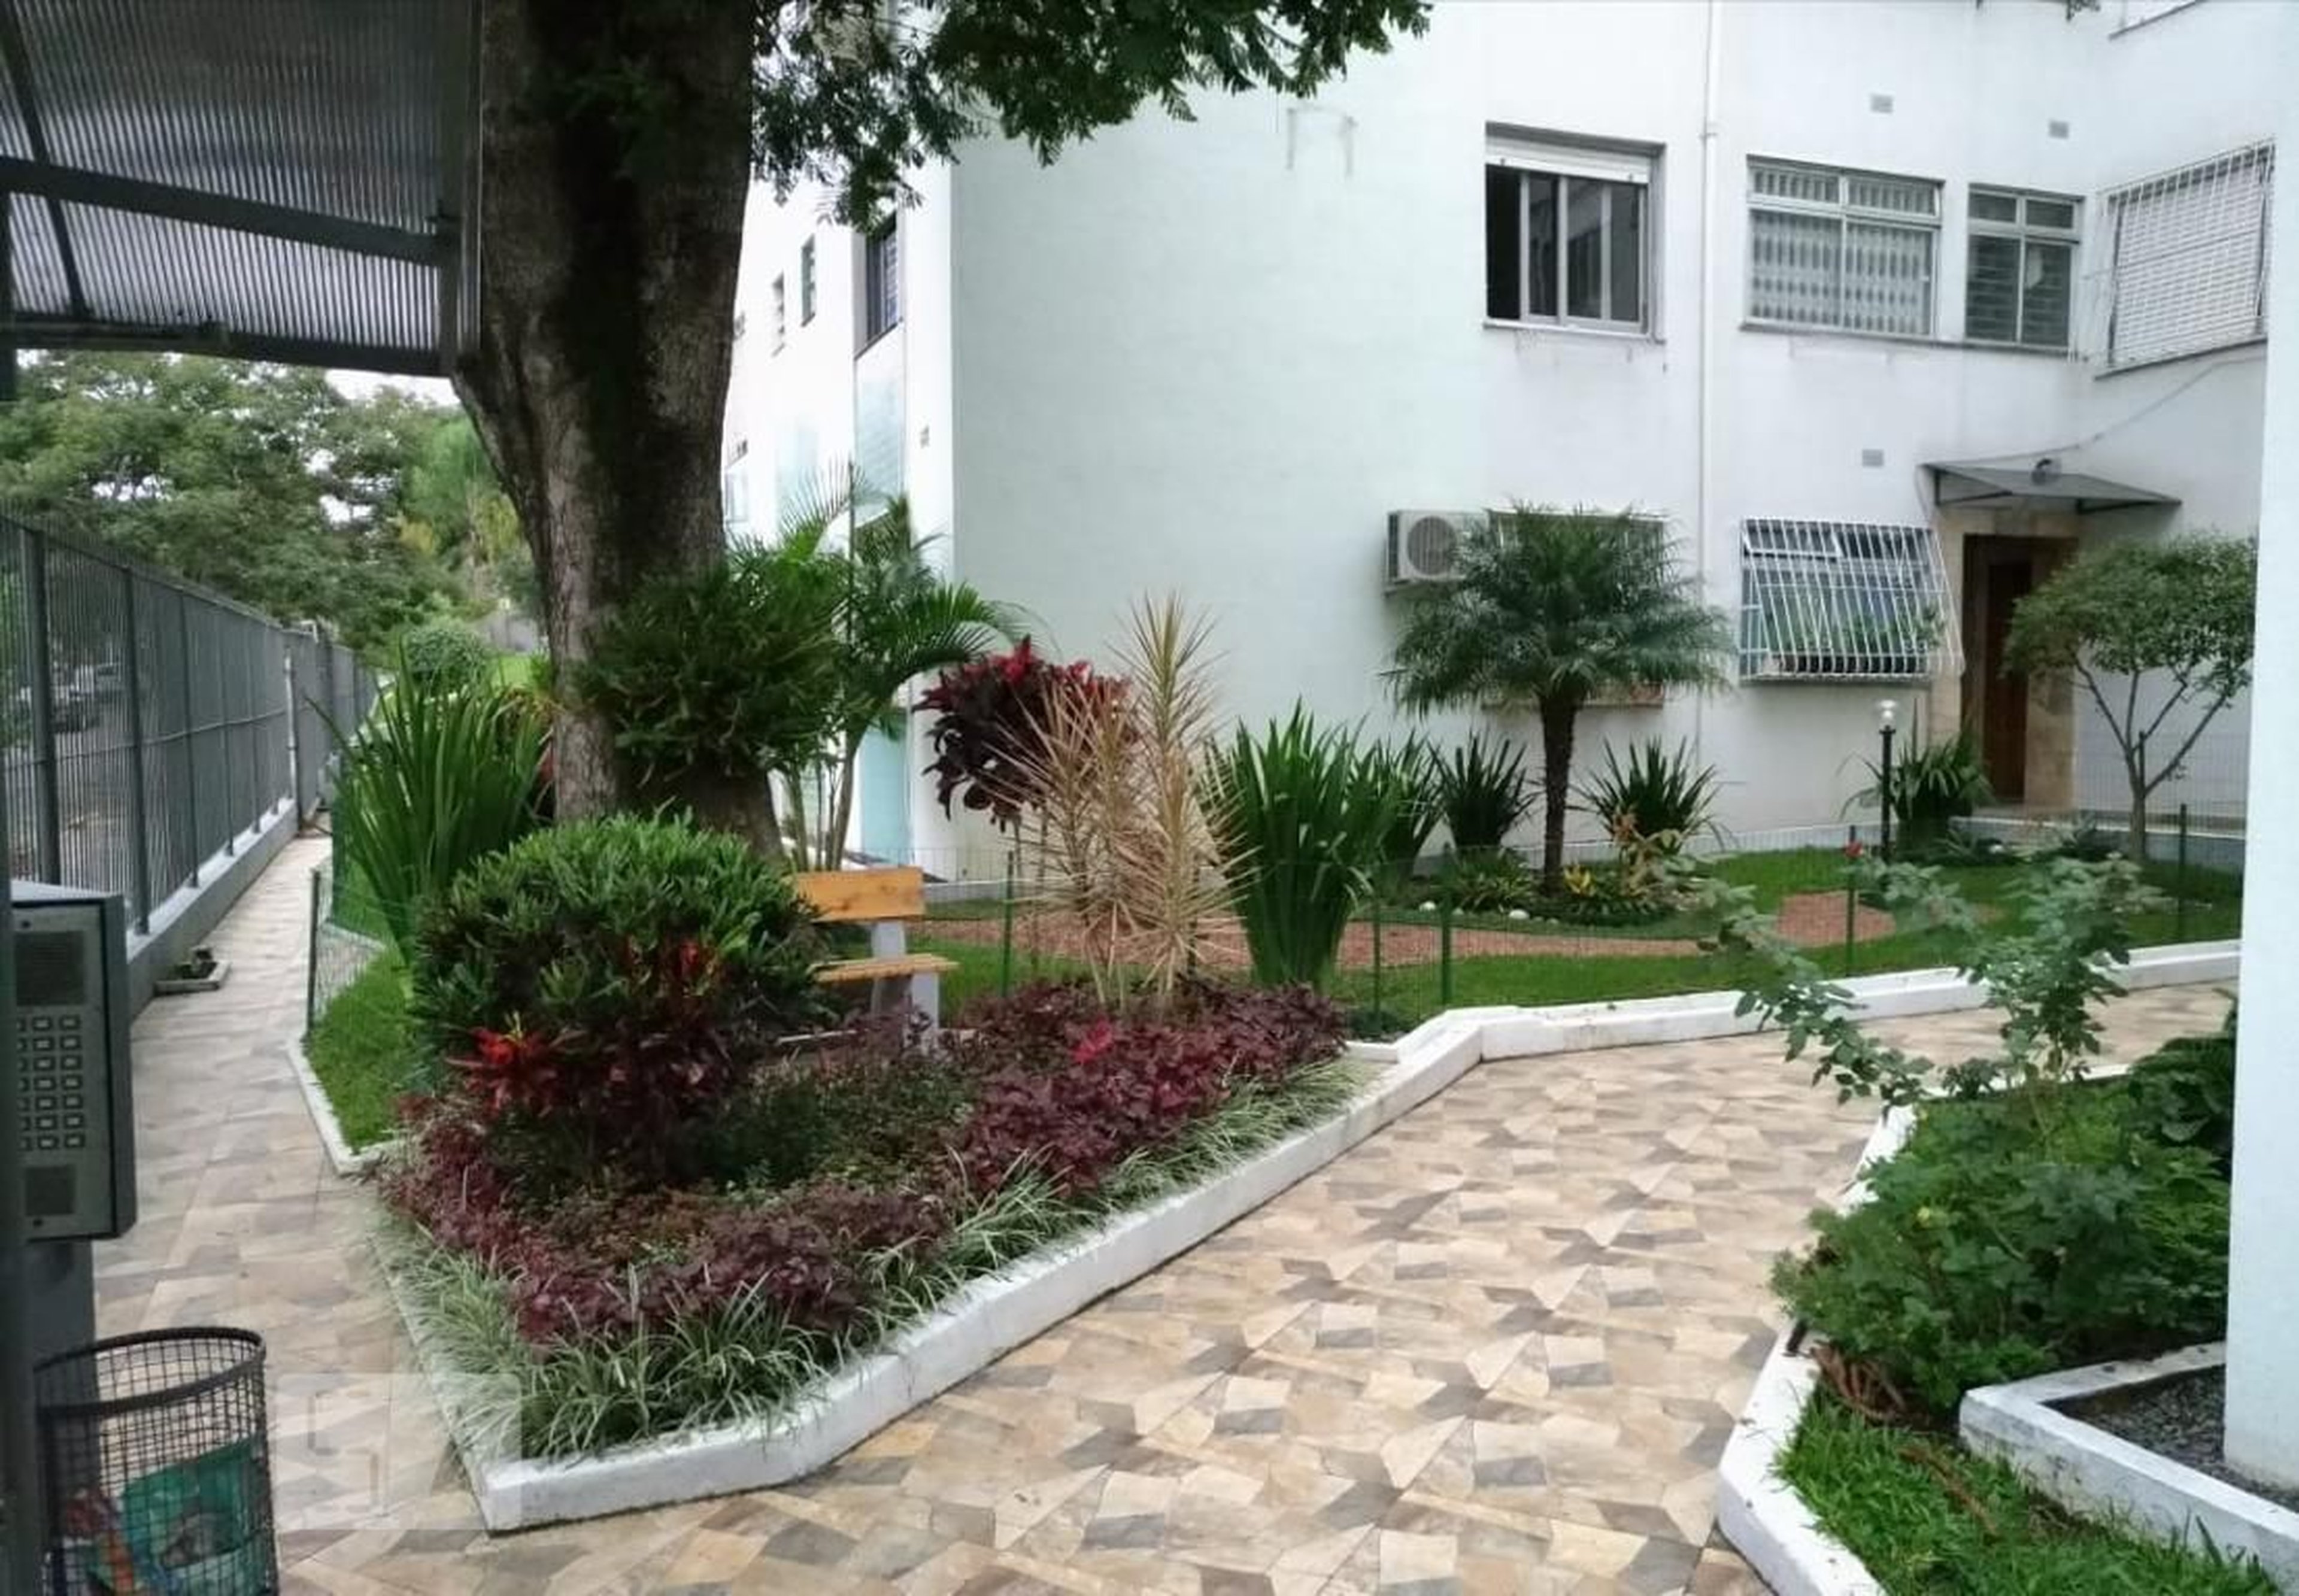 Área externa - Jardim de Bragança